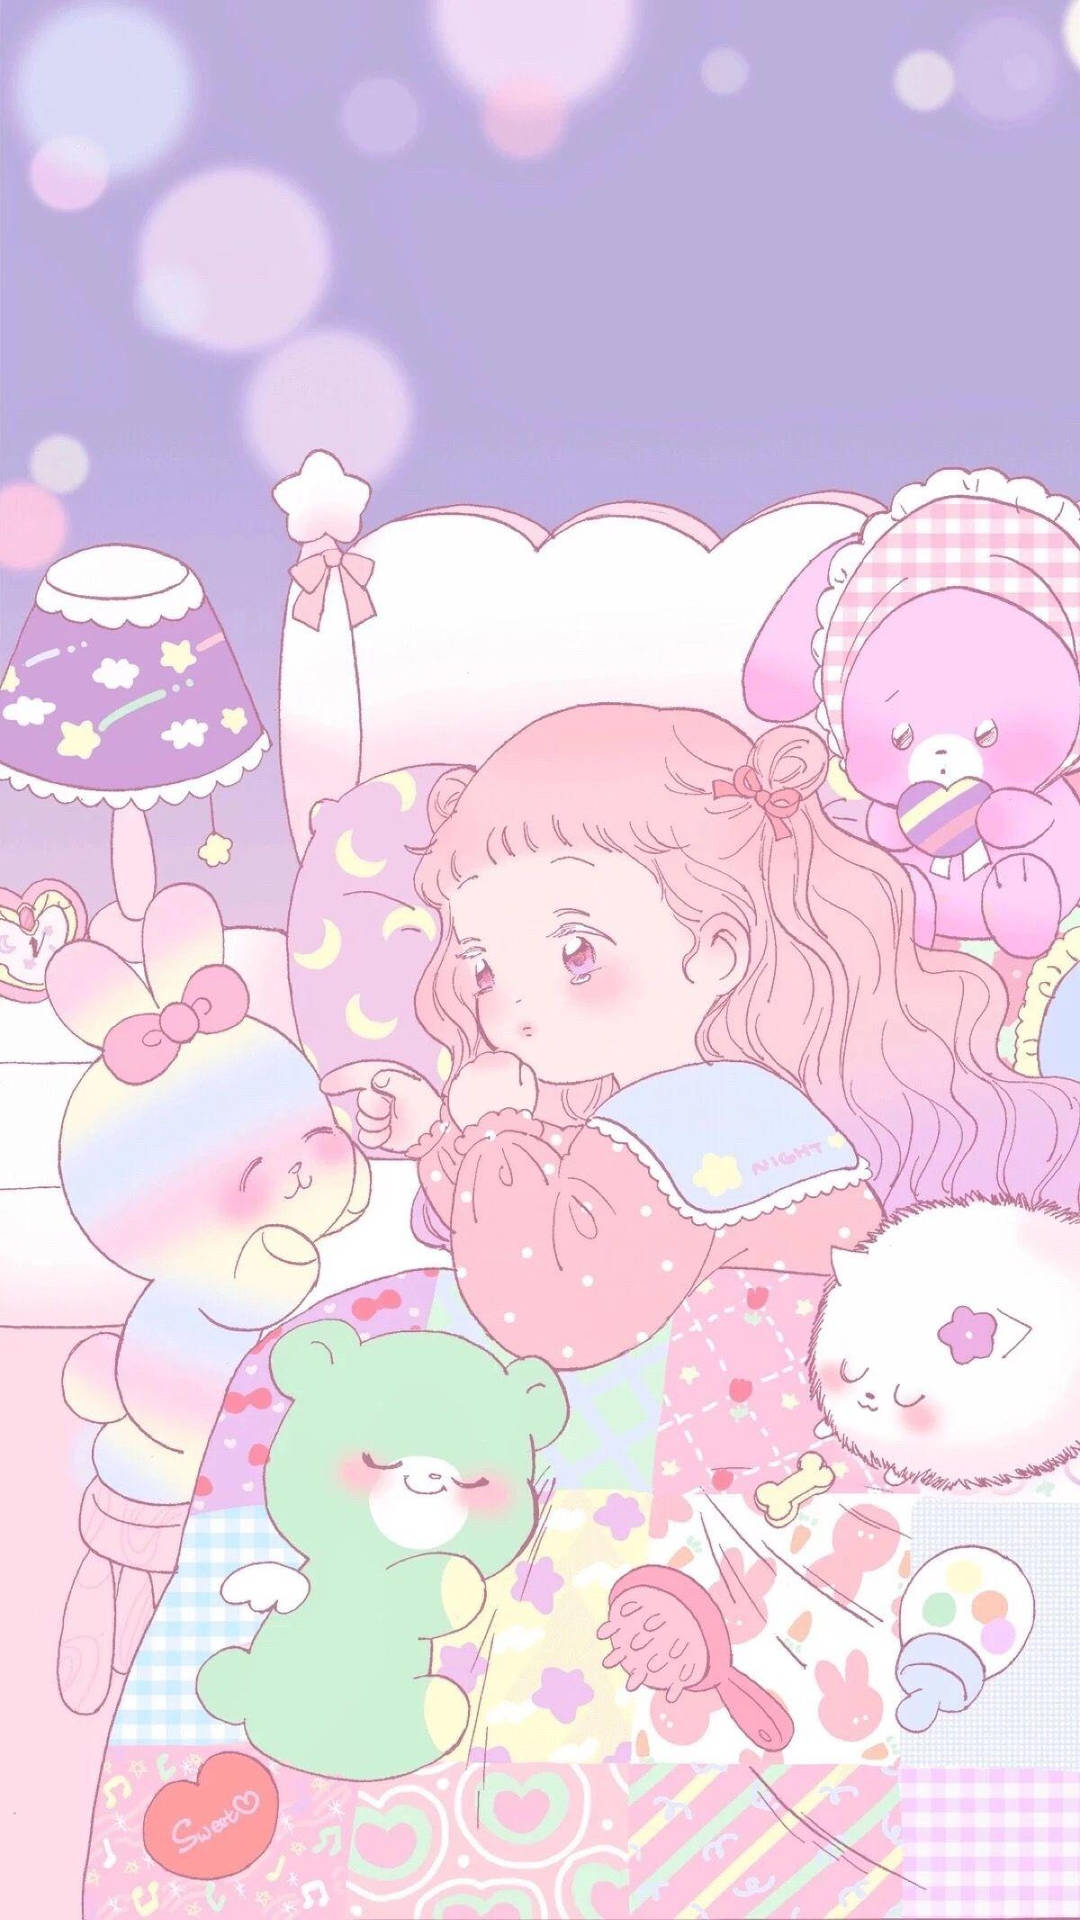 Kawaii Anime Girl On Bed With Sutffed Toys Wallpaper